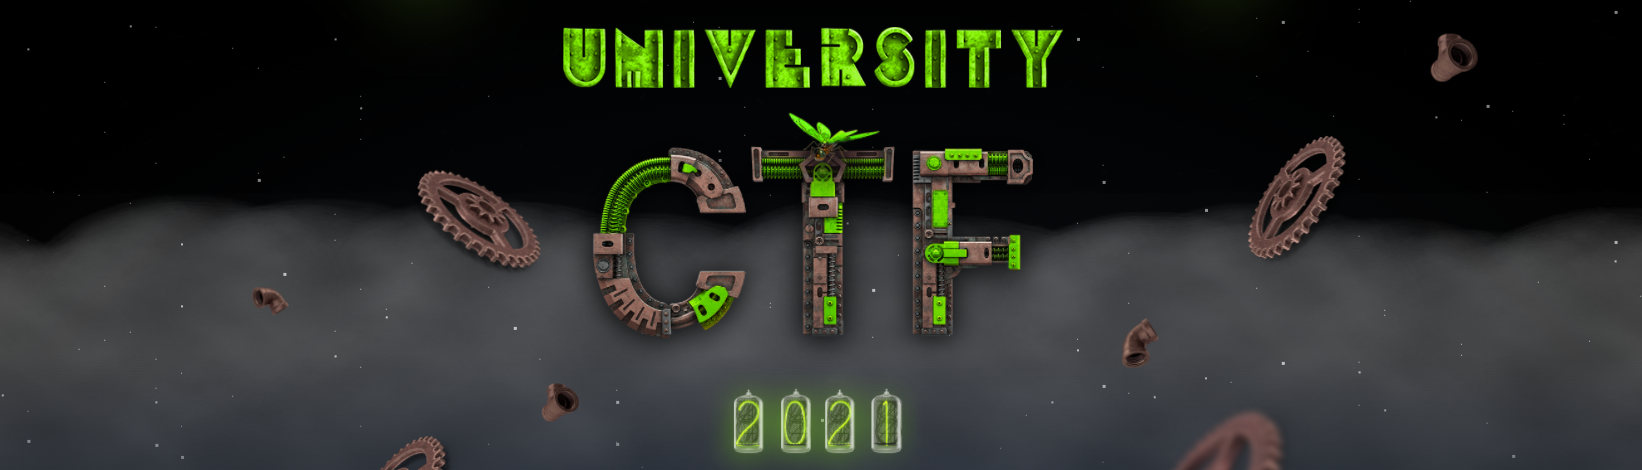 header displaying the logo of hackthebox's university CTF 2021